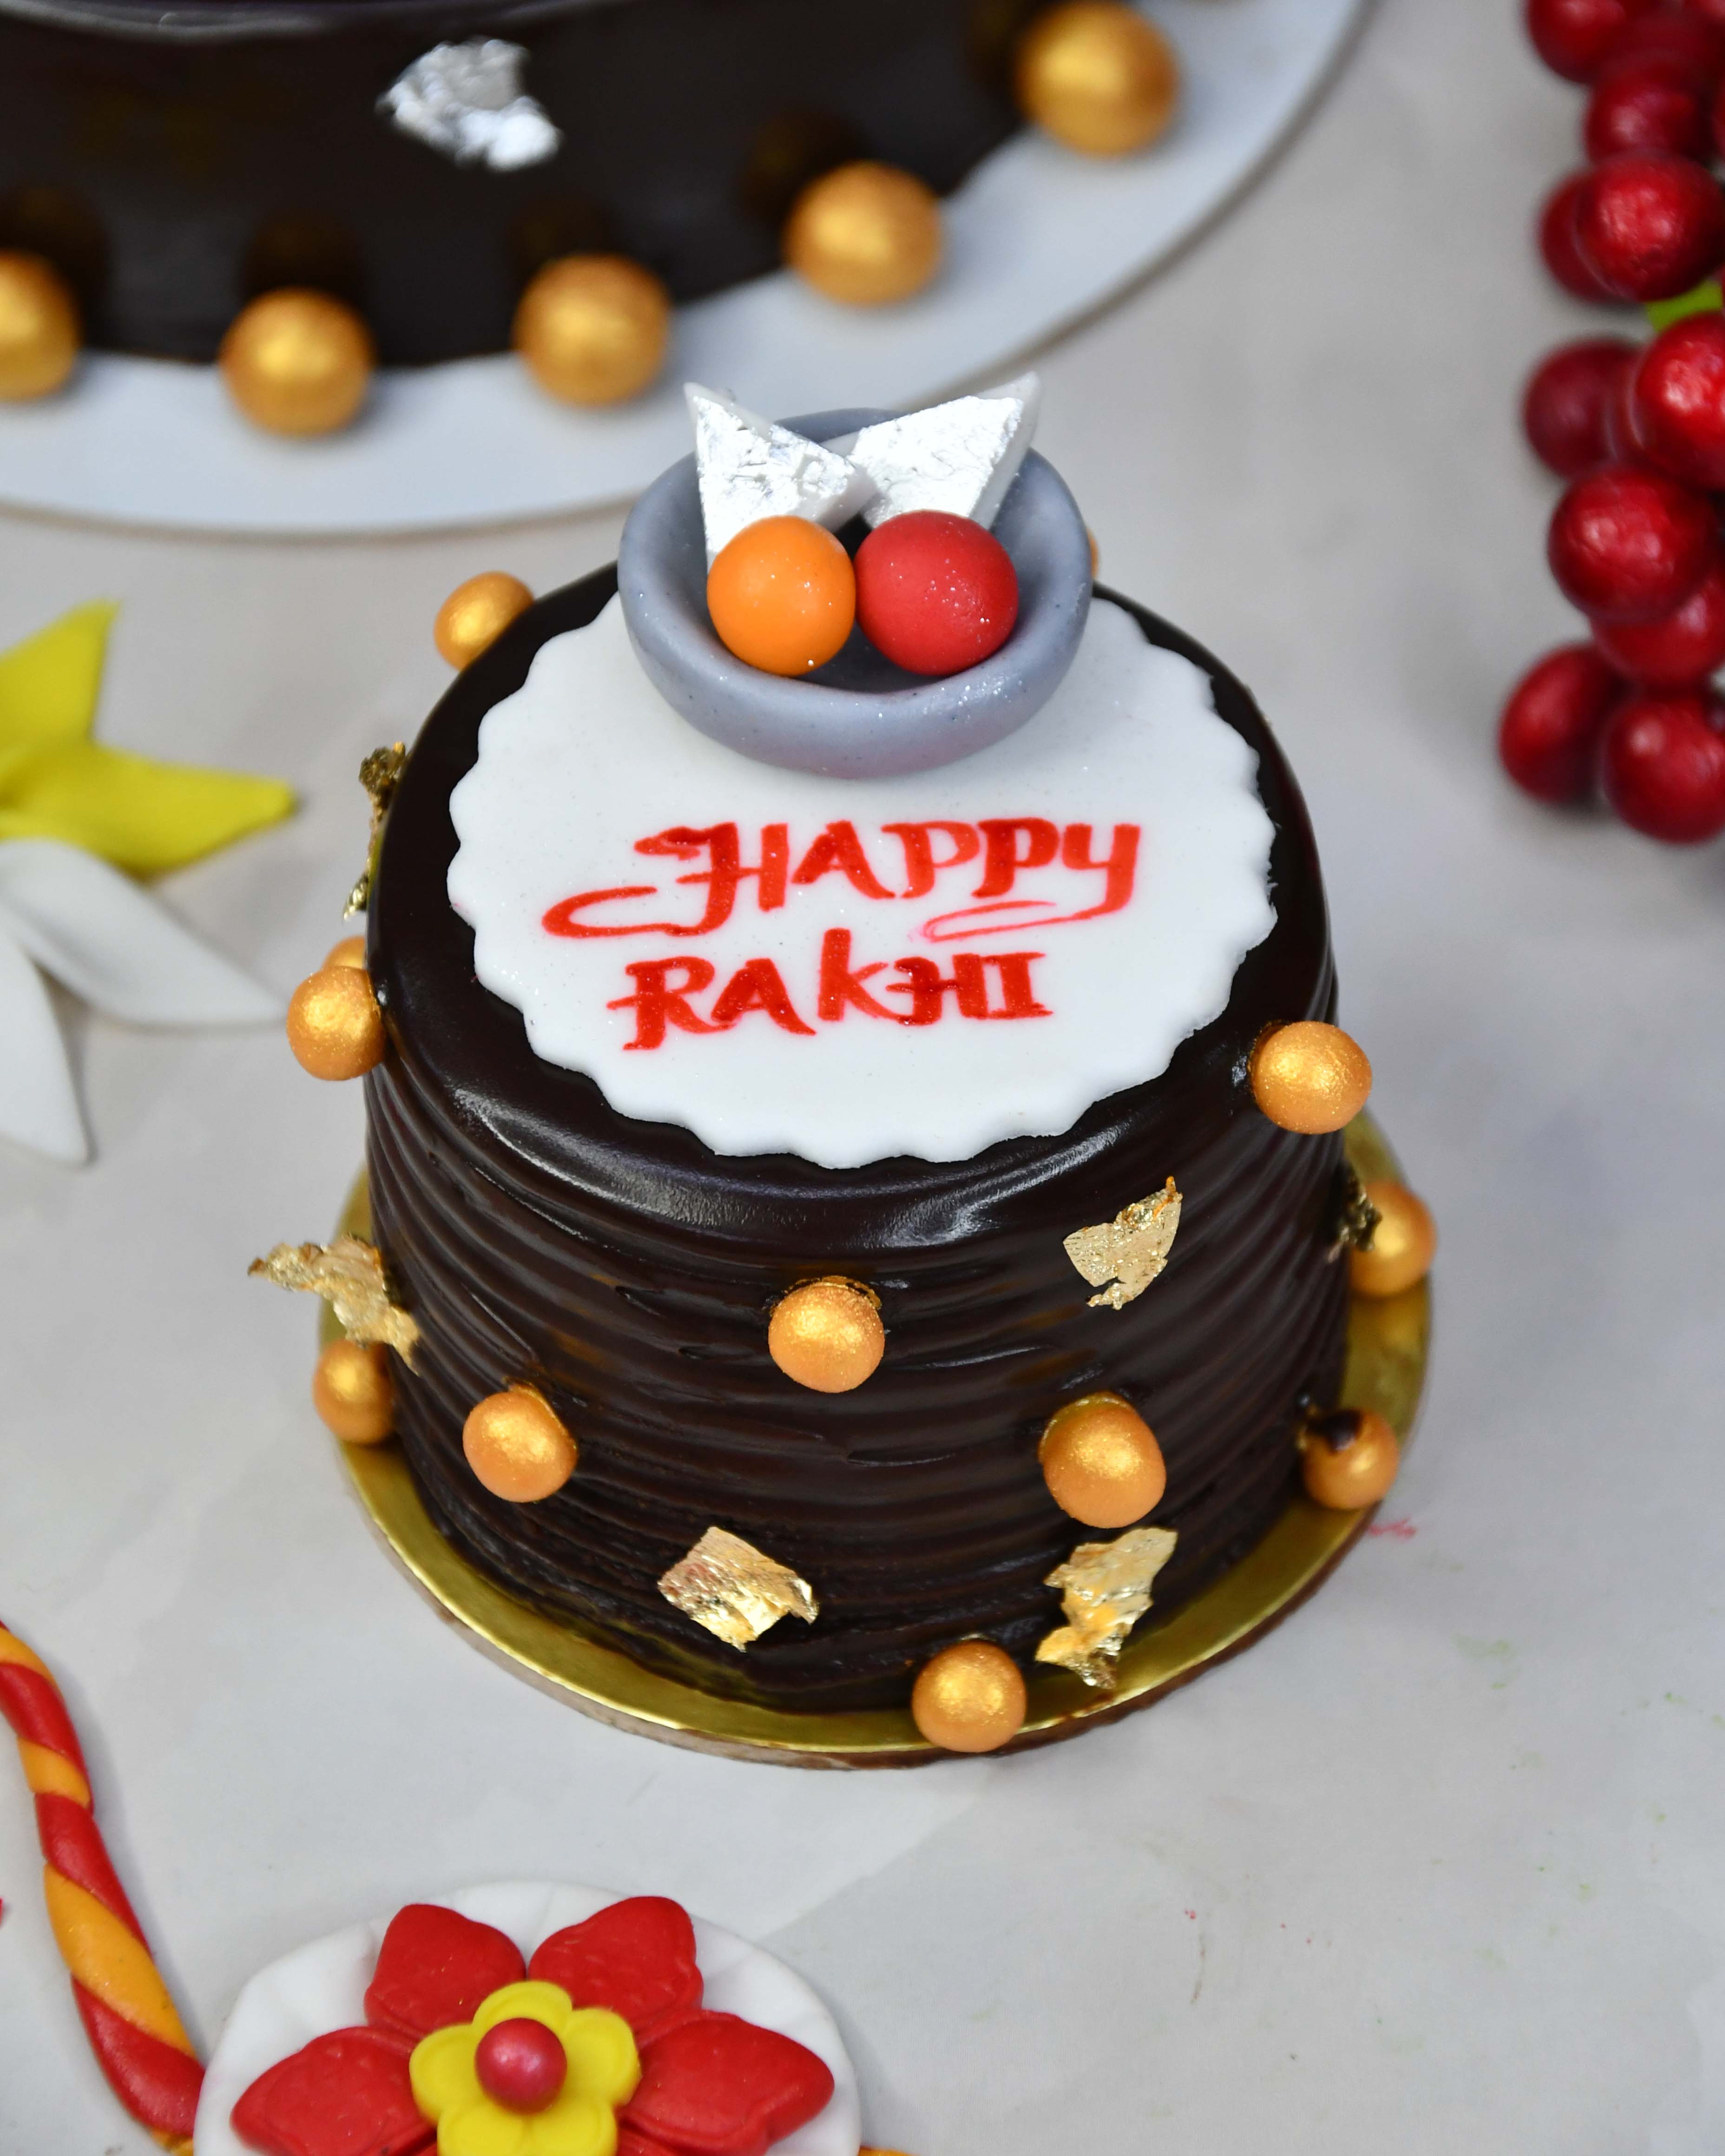 Rakhi Theme Cakes Archives - All Things Sweet